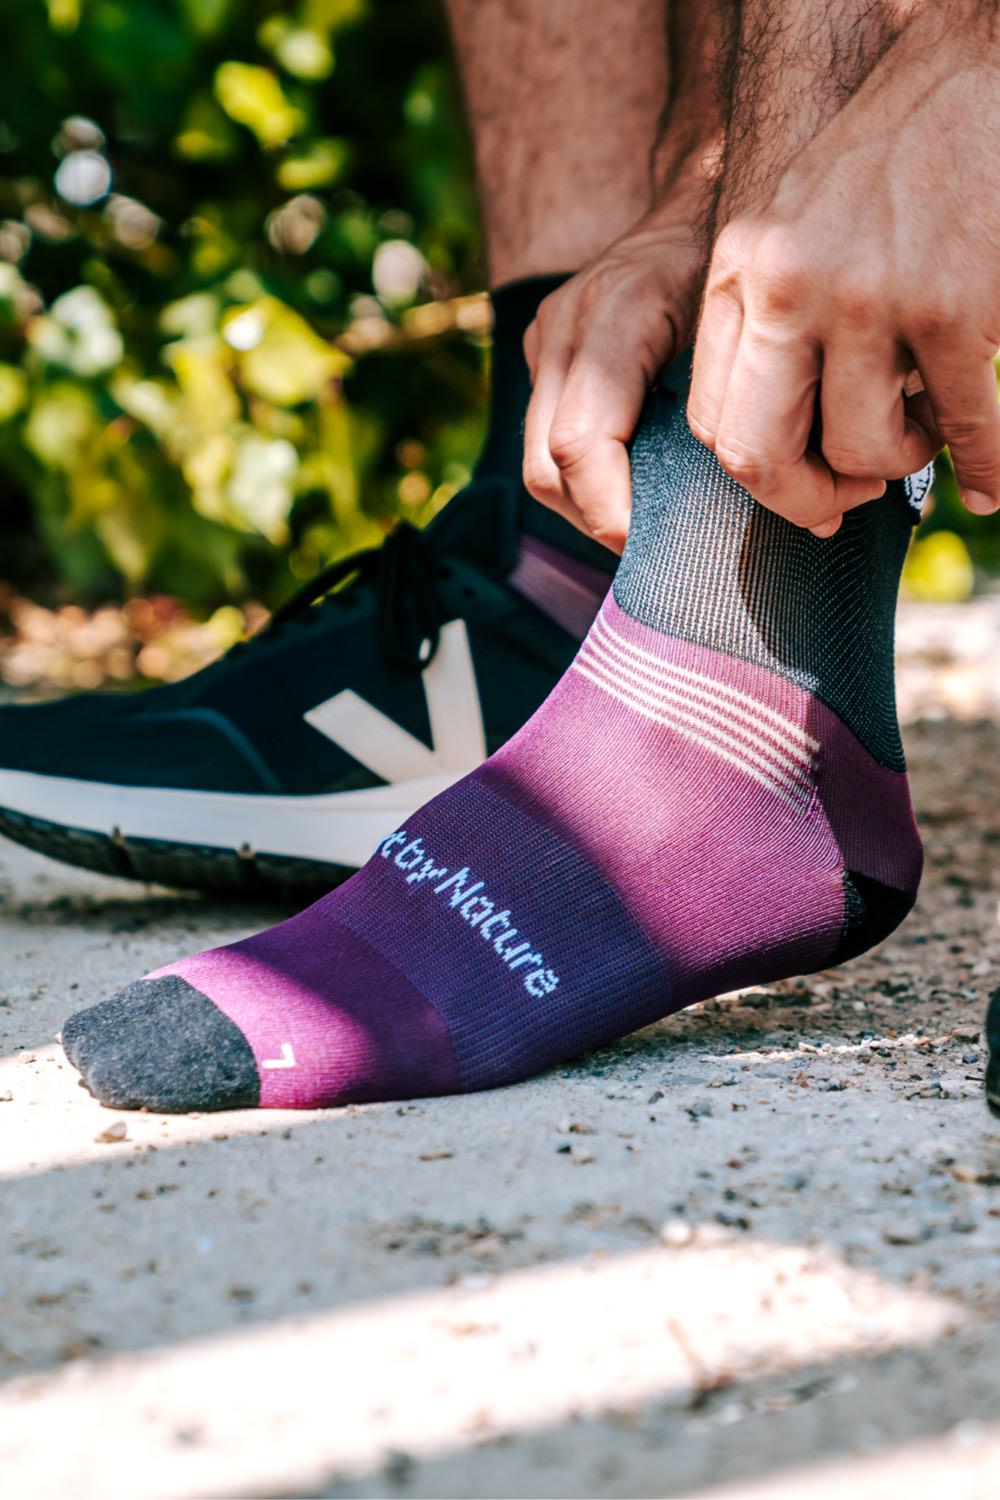 Dual Socks - Chaussettes polyvalentes [purple]